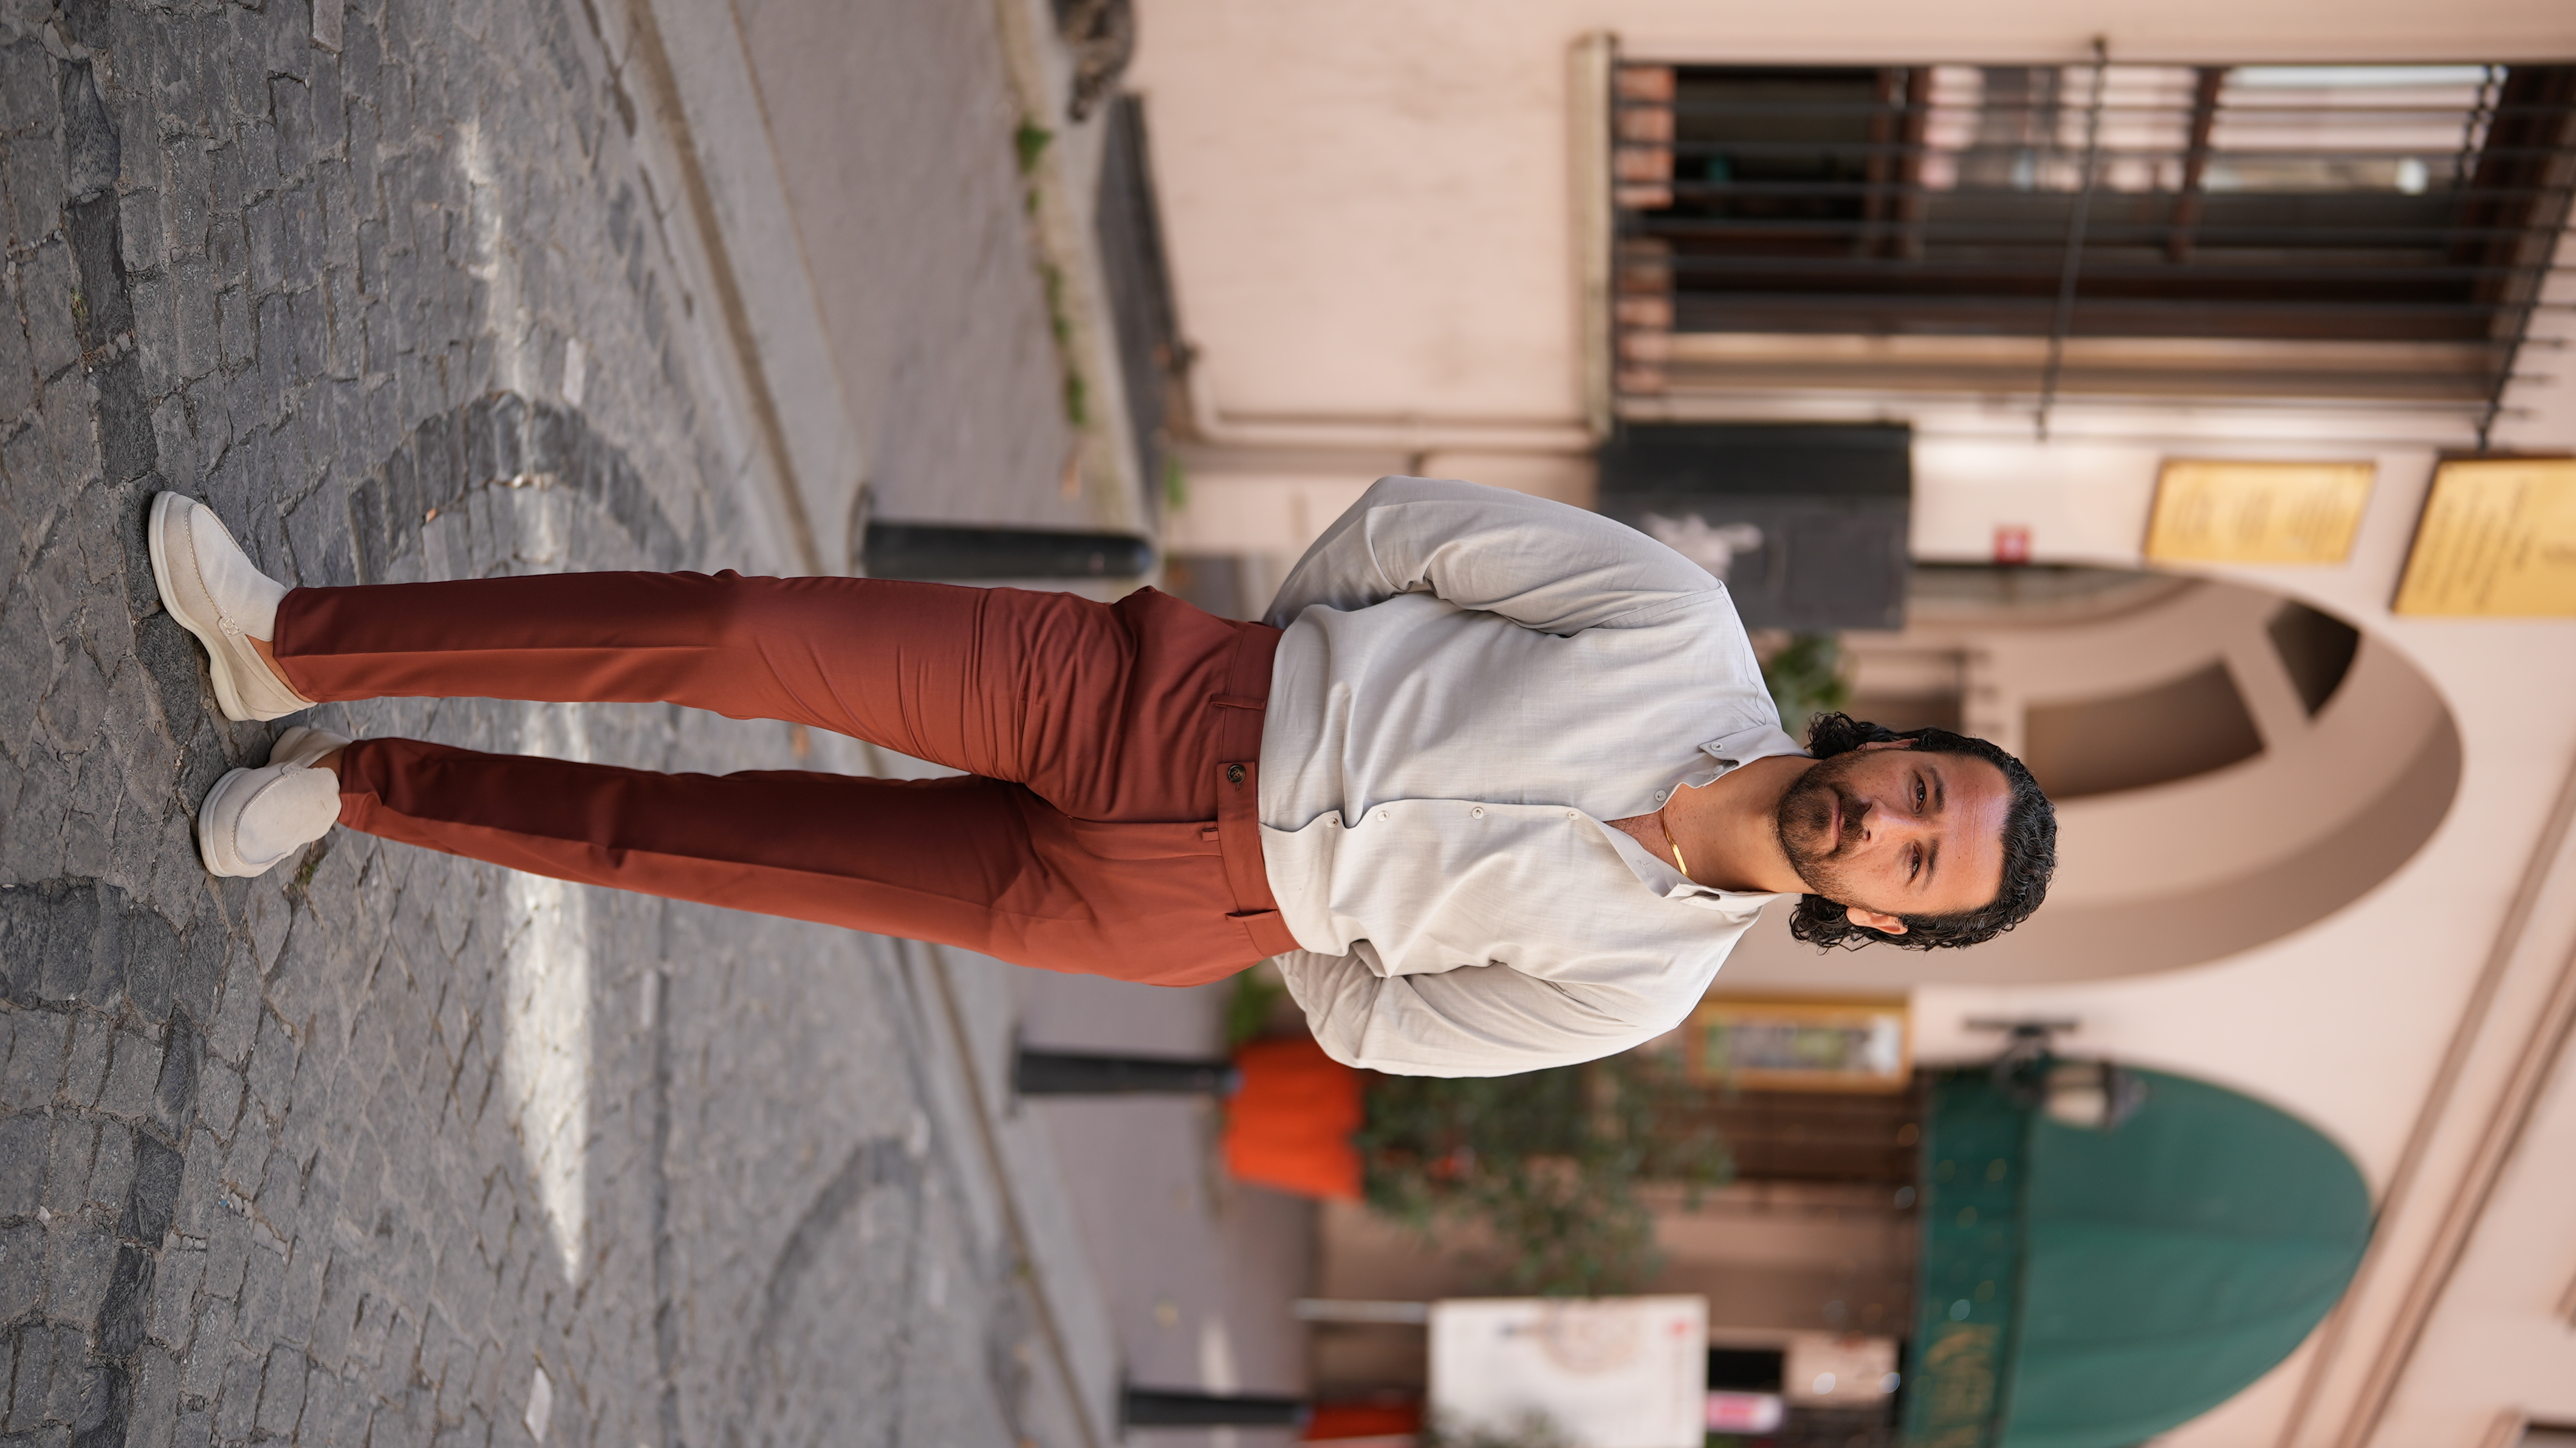 İtalyan Stil Slim Fit Erkek Pantolon-Kiremit